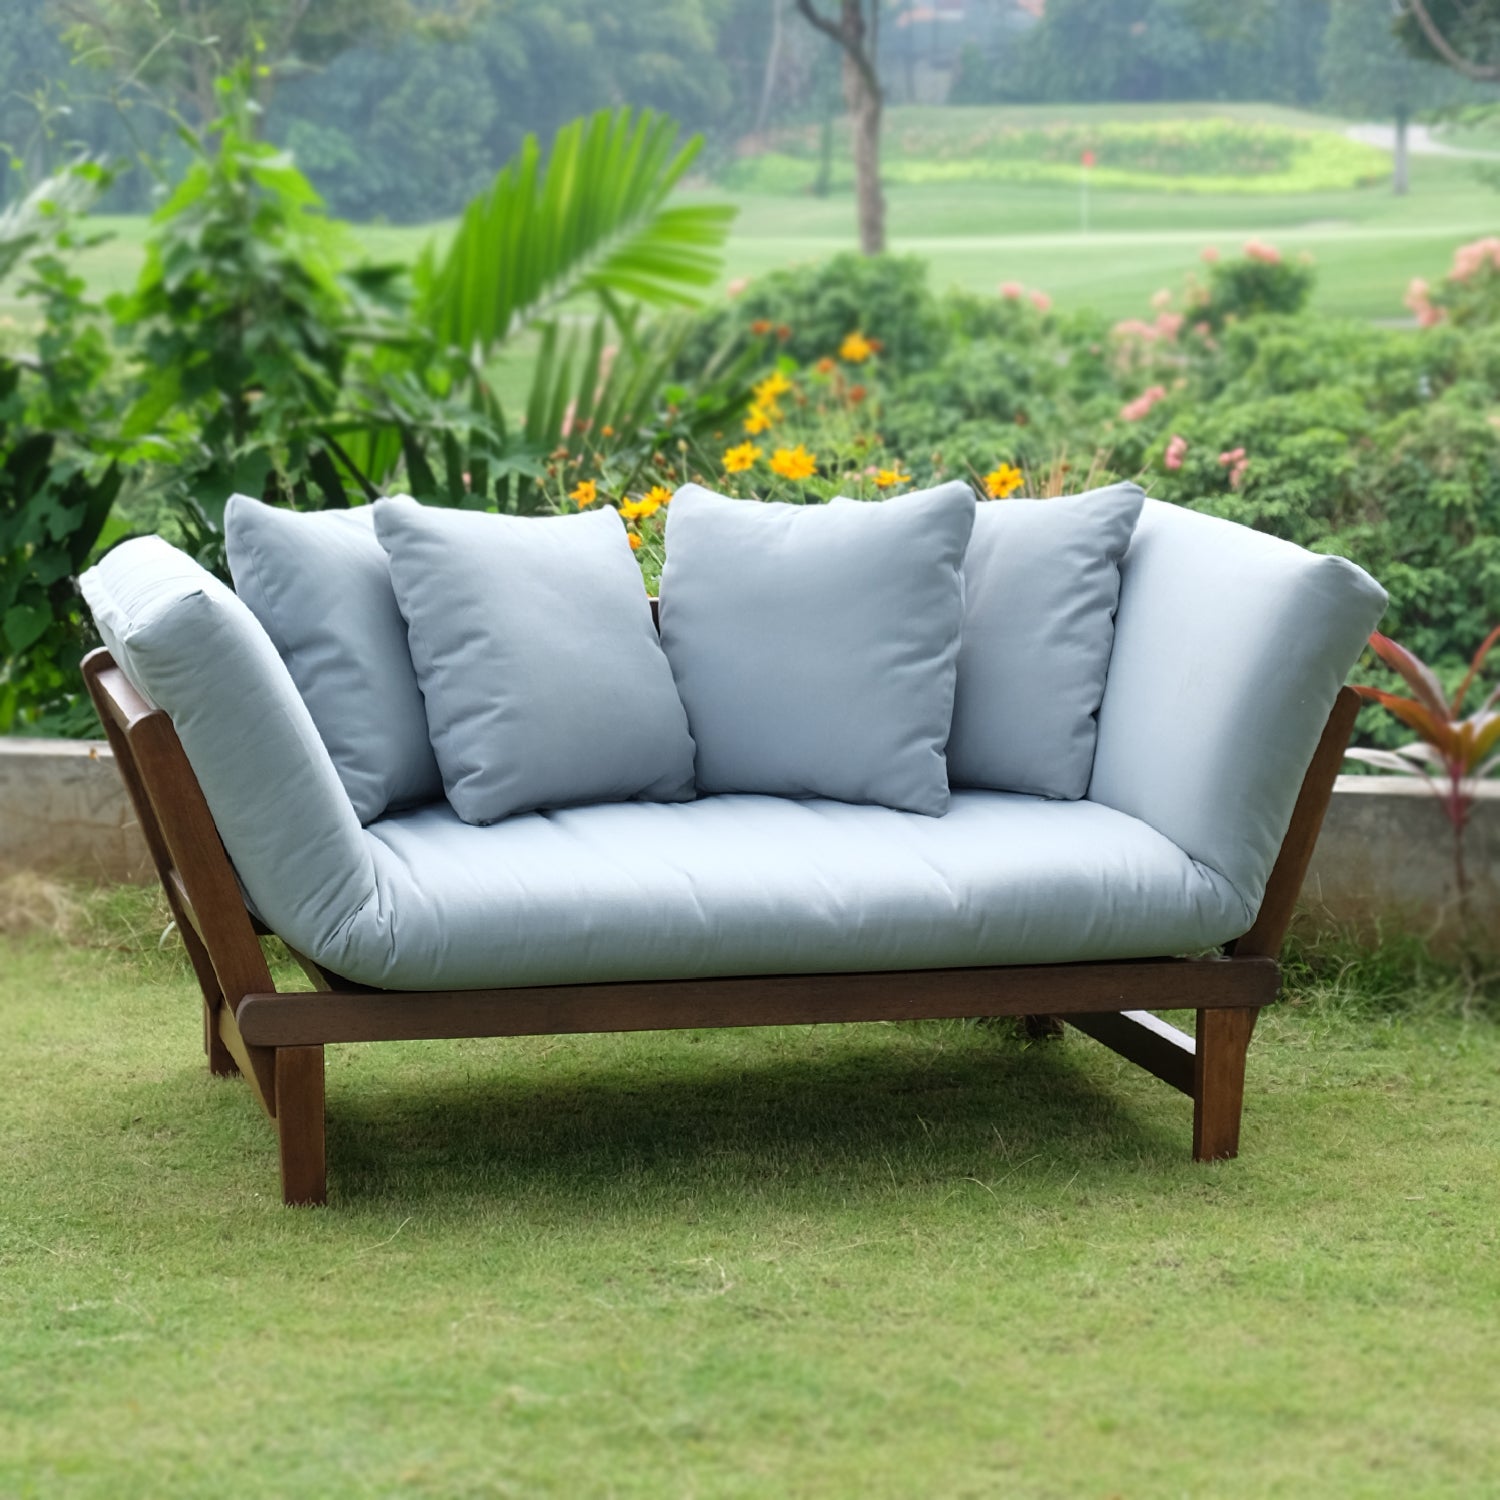 Carlota Mahogany Wood Outdoor Convertible Sofa Daybed - Natural Brown Wood / Blue Spruce Cushion - Cambridge Casual